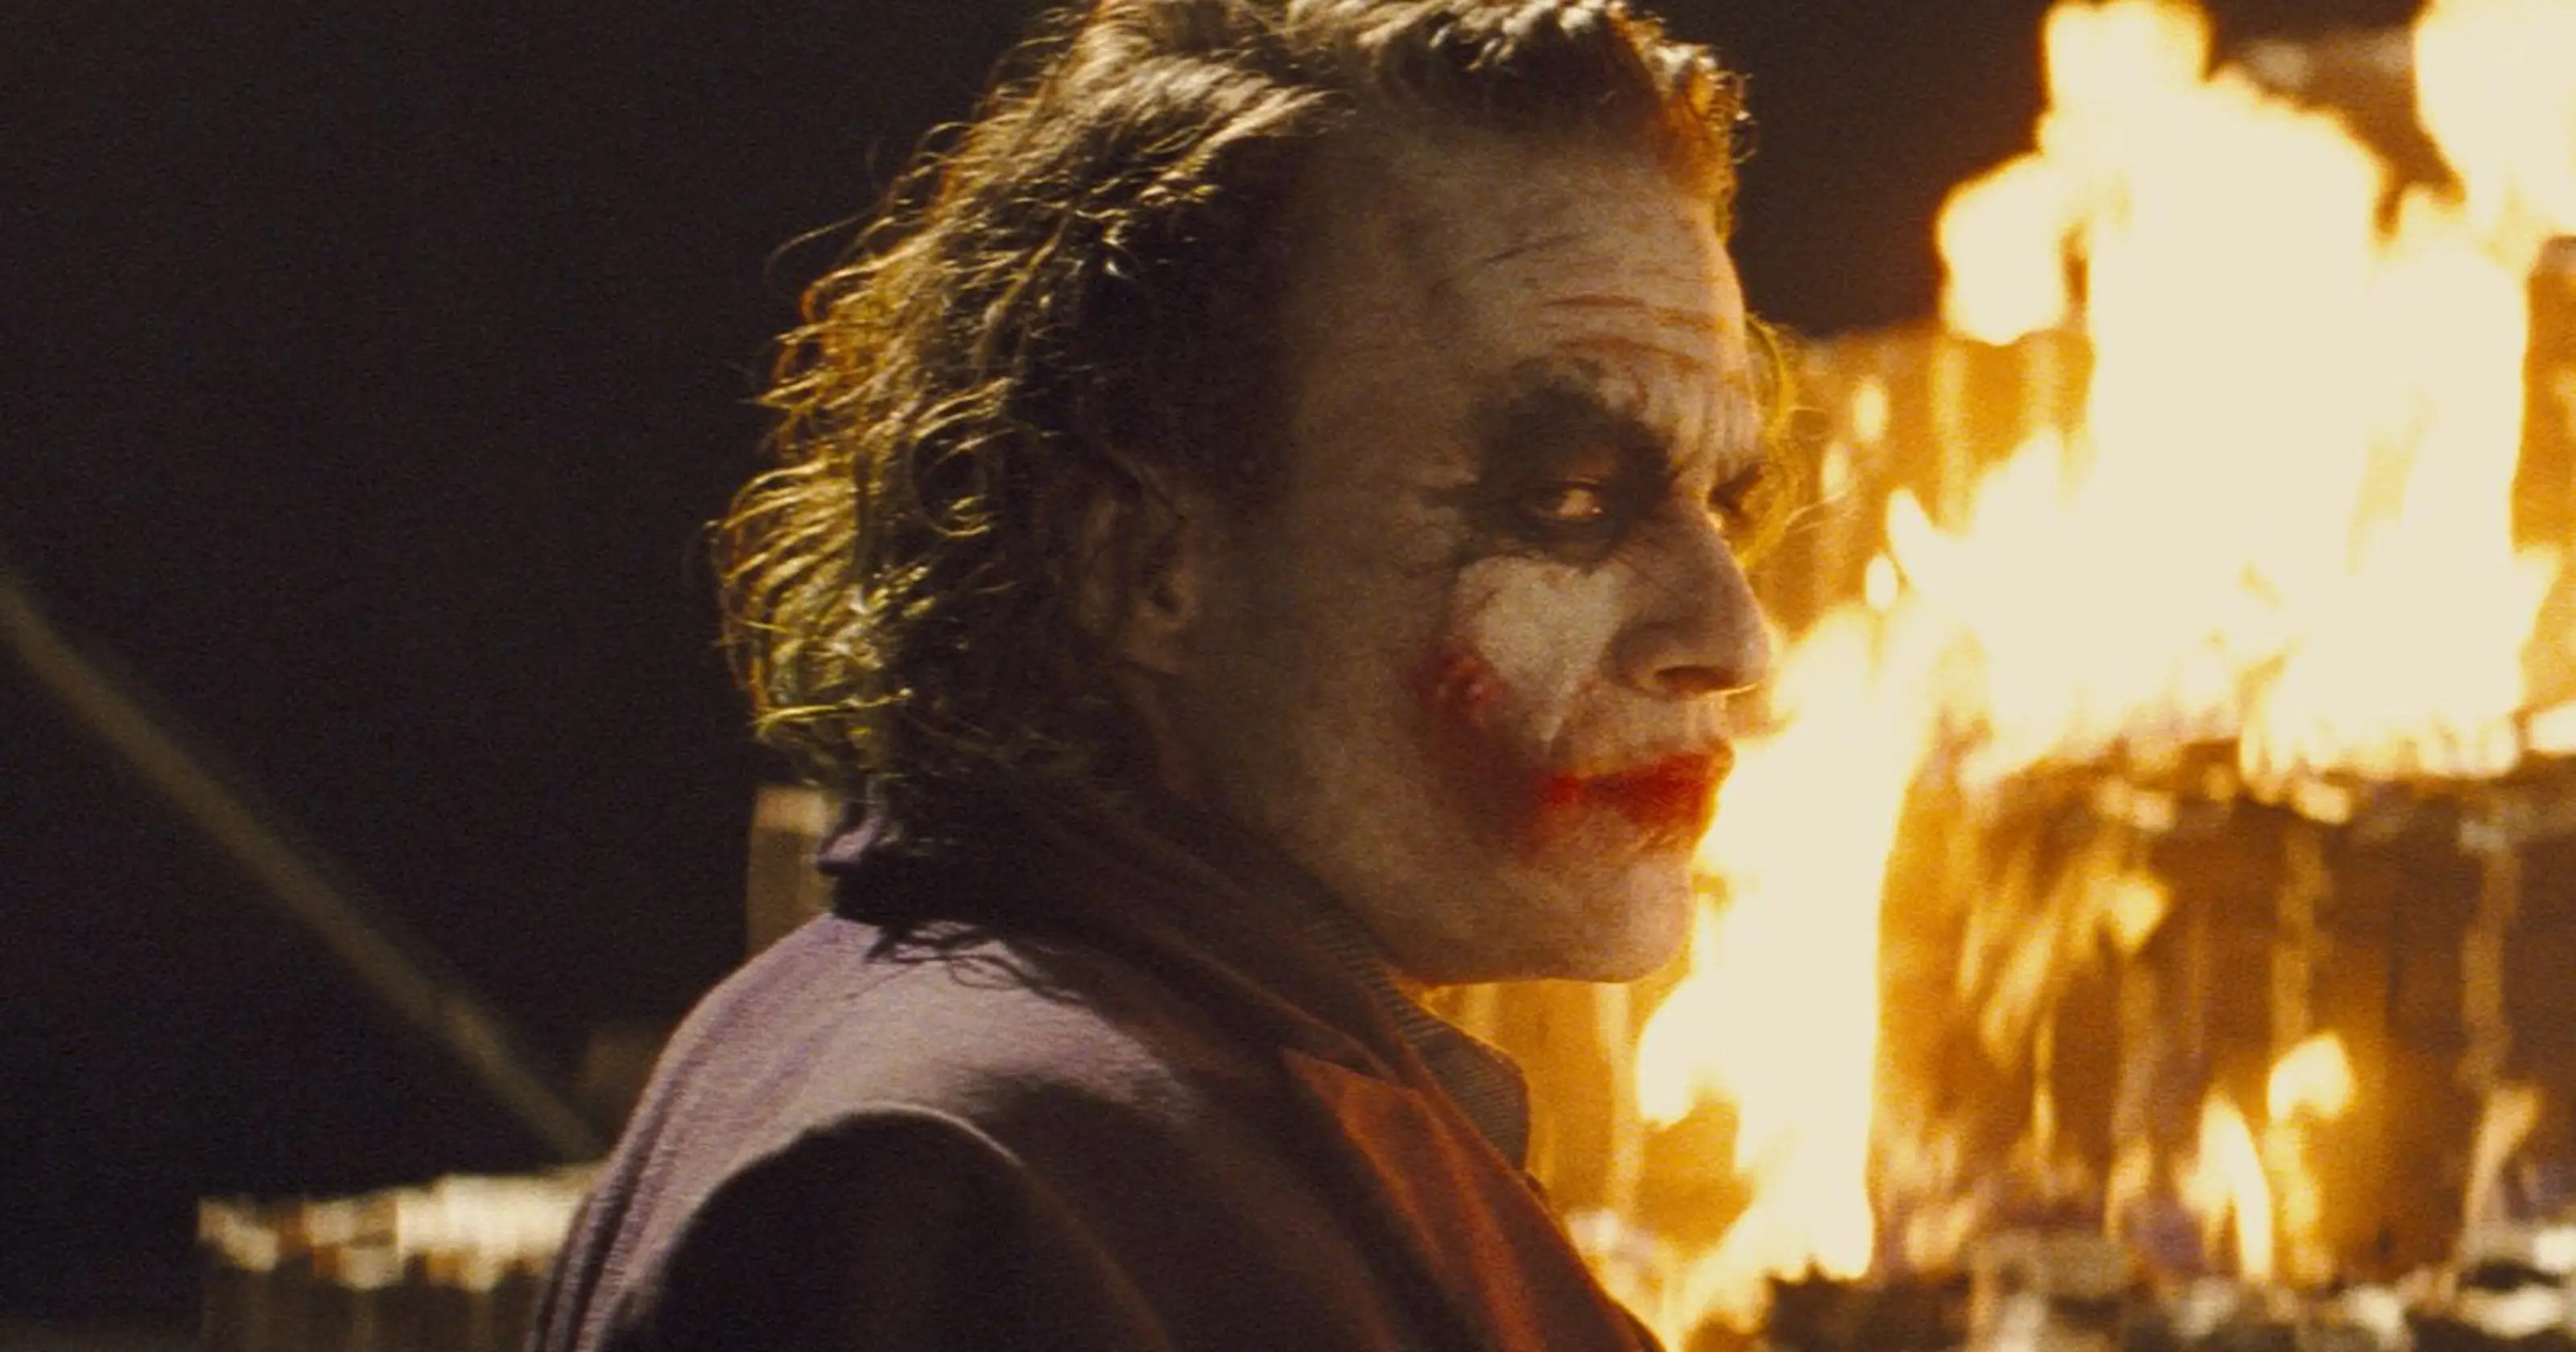 The Joker, The Dark Knight (2008)